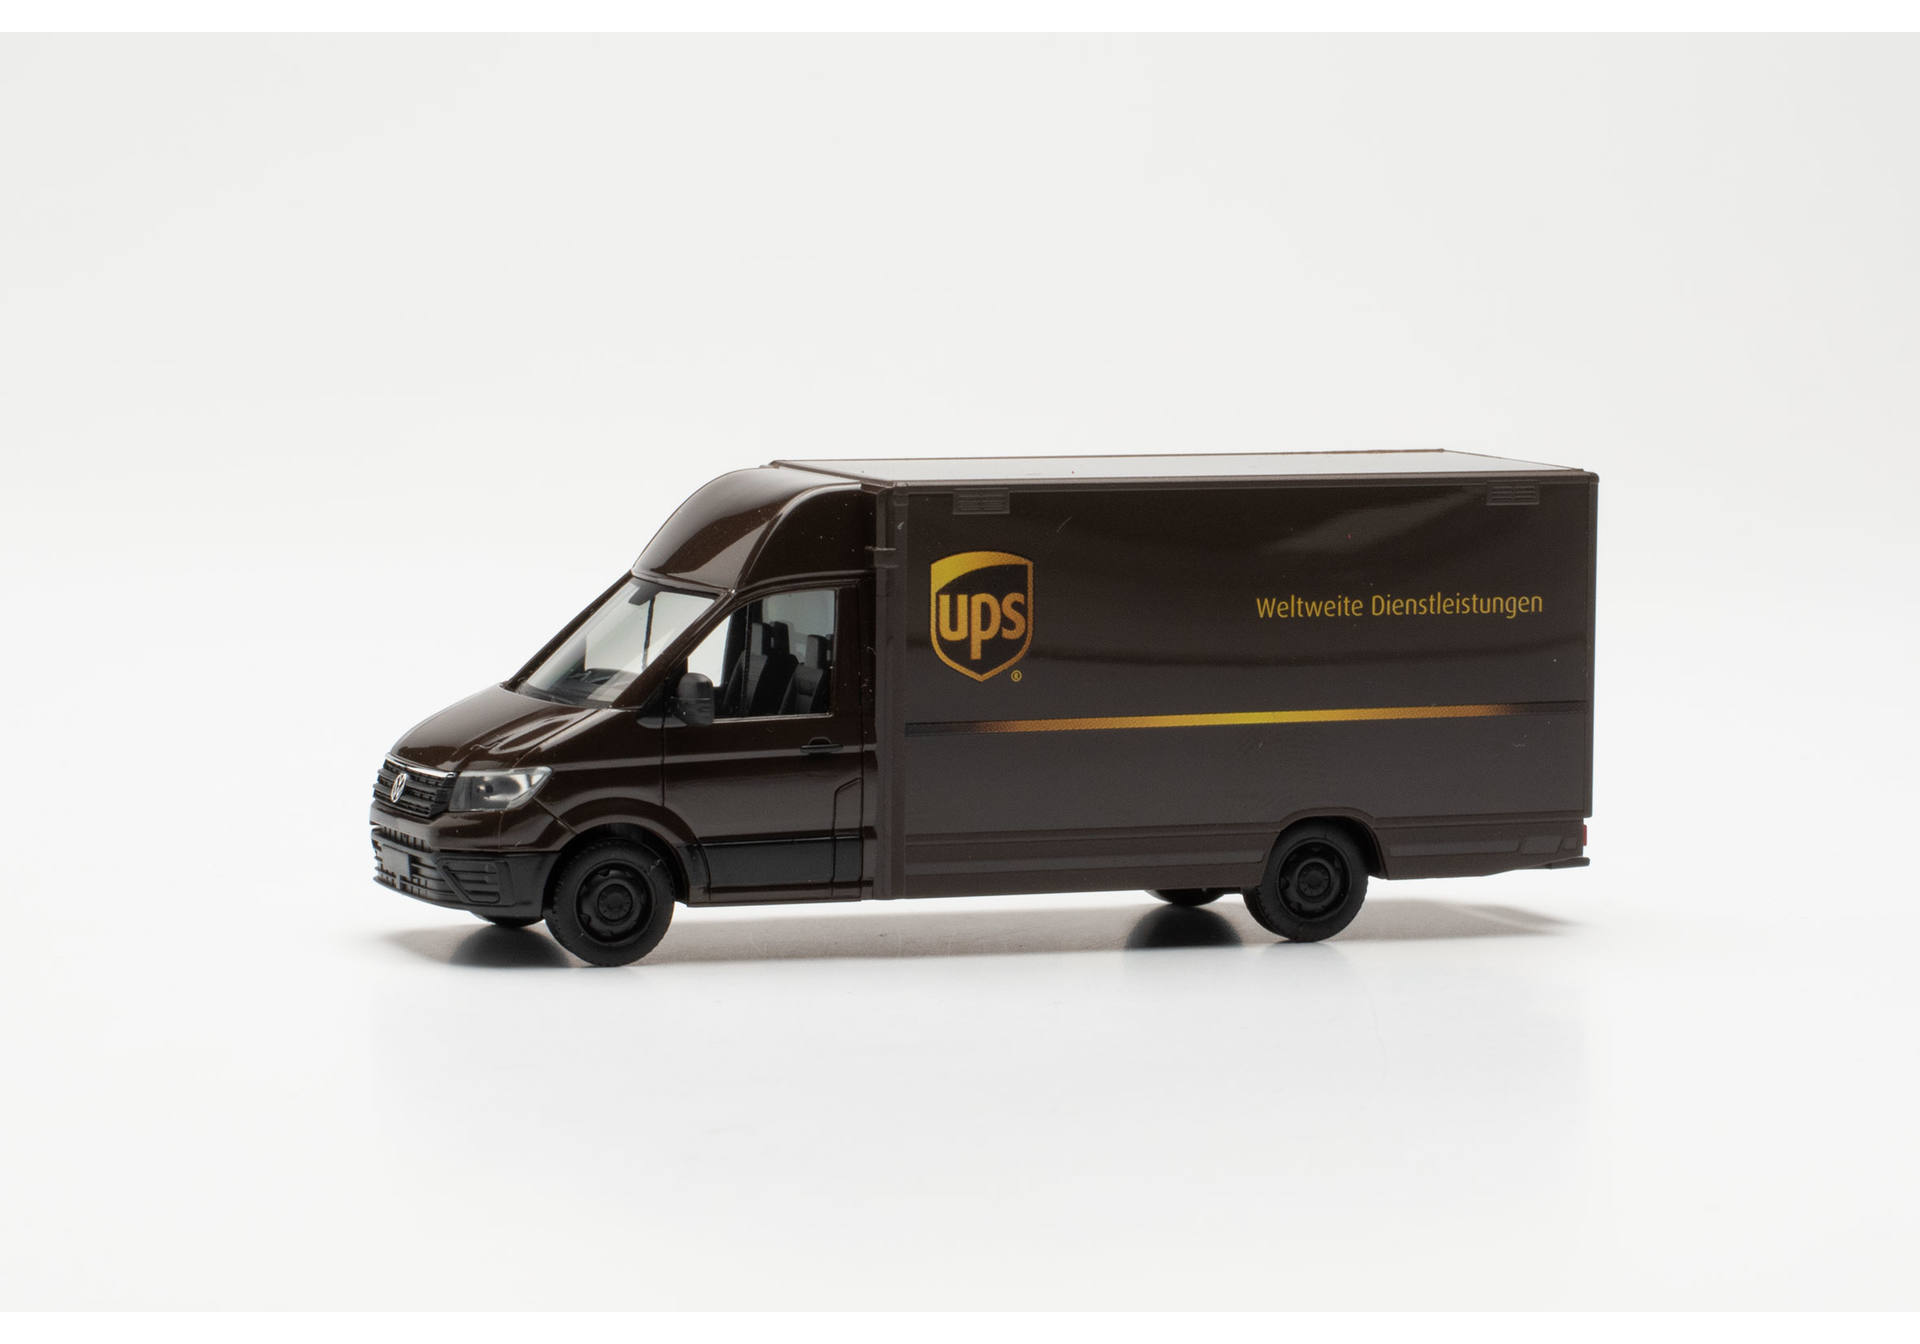 Volkswagen (VW) Crafter package distribution vehicle "UPS"